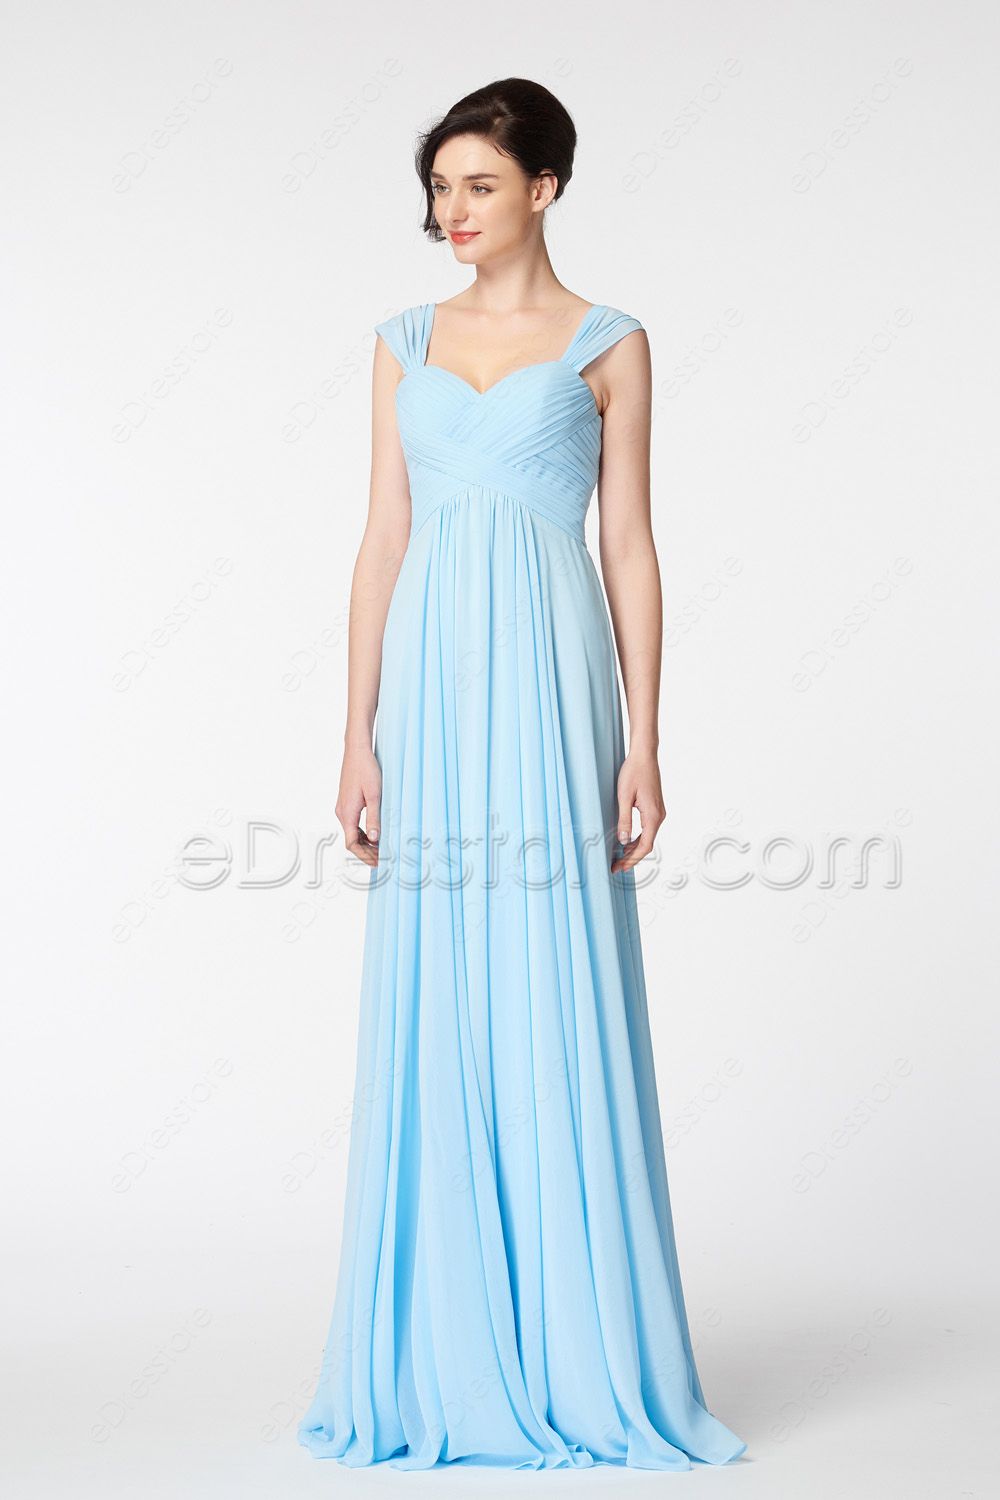 Sweetheart Light Blue Bridesmaid Dresses with Straps | eDresstore